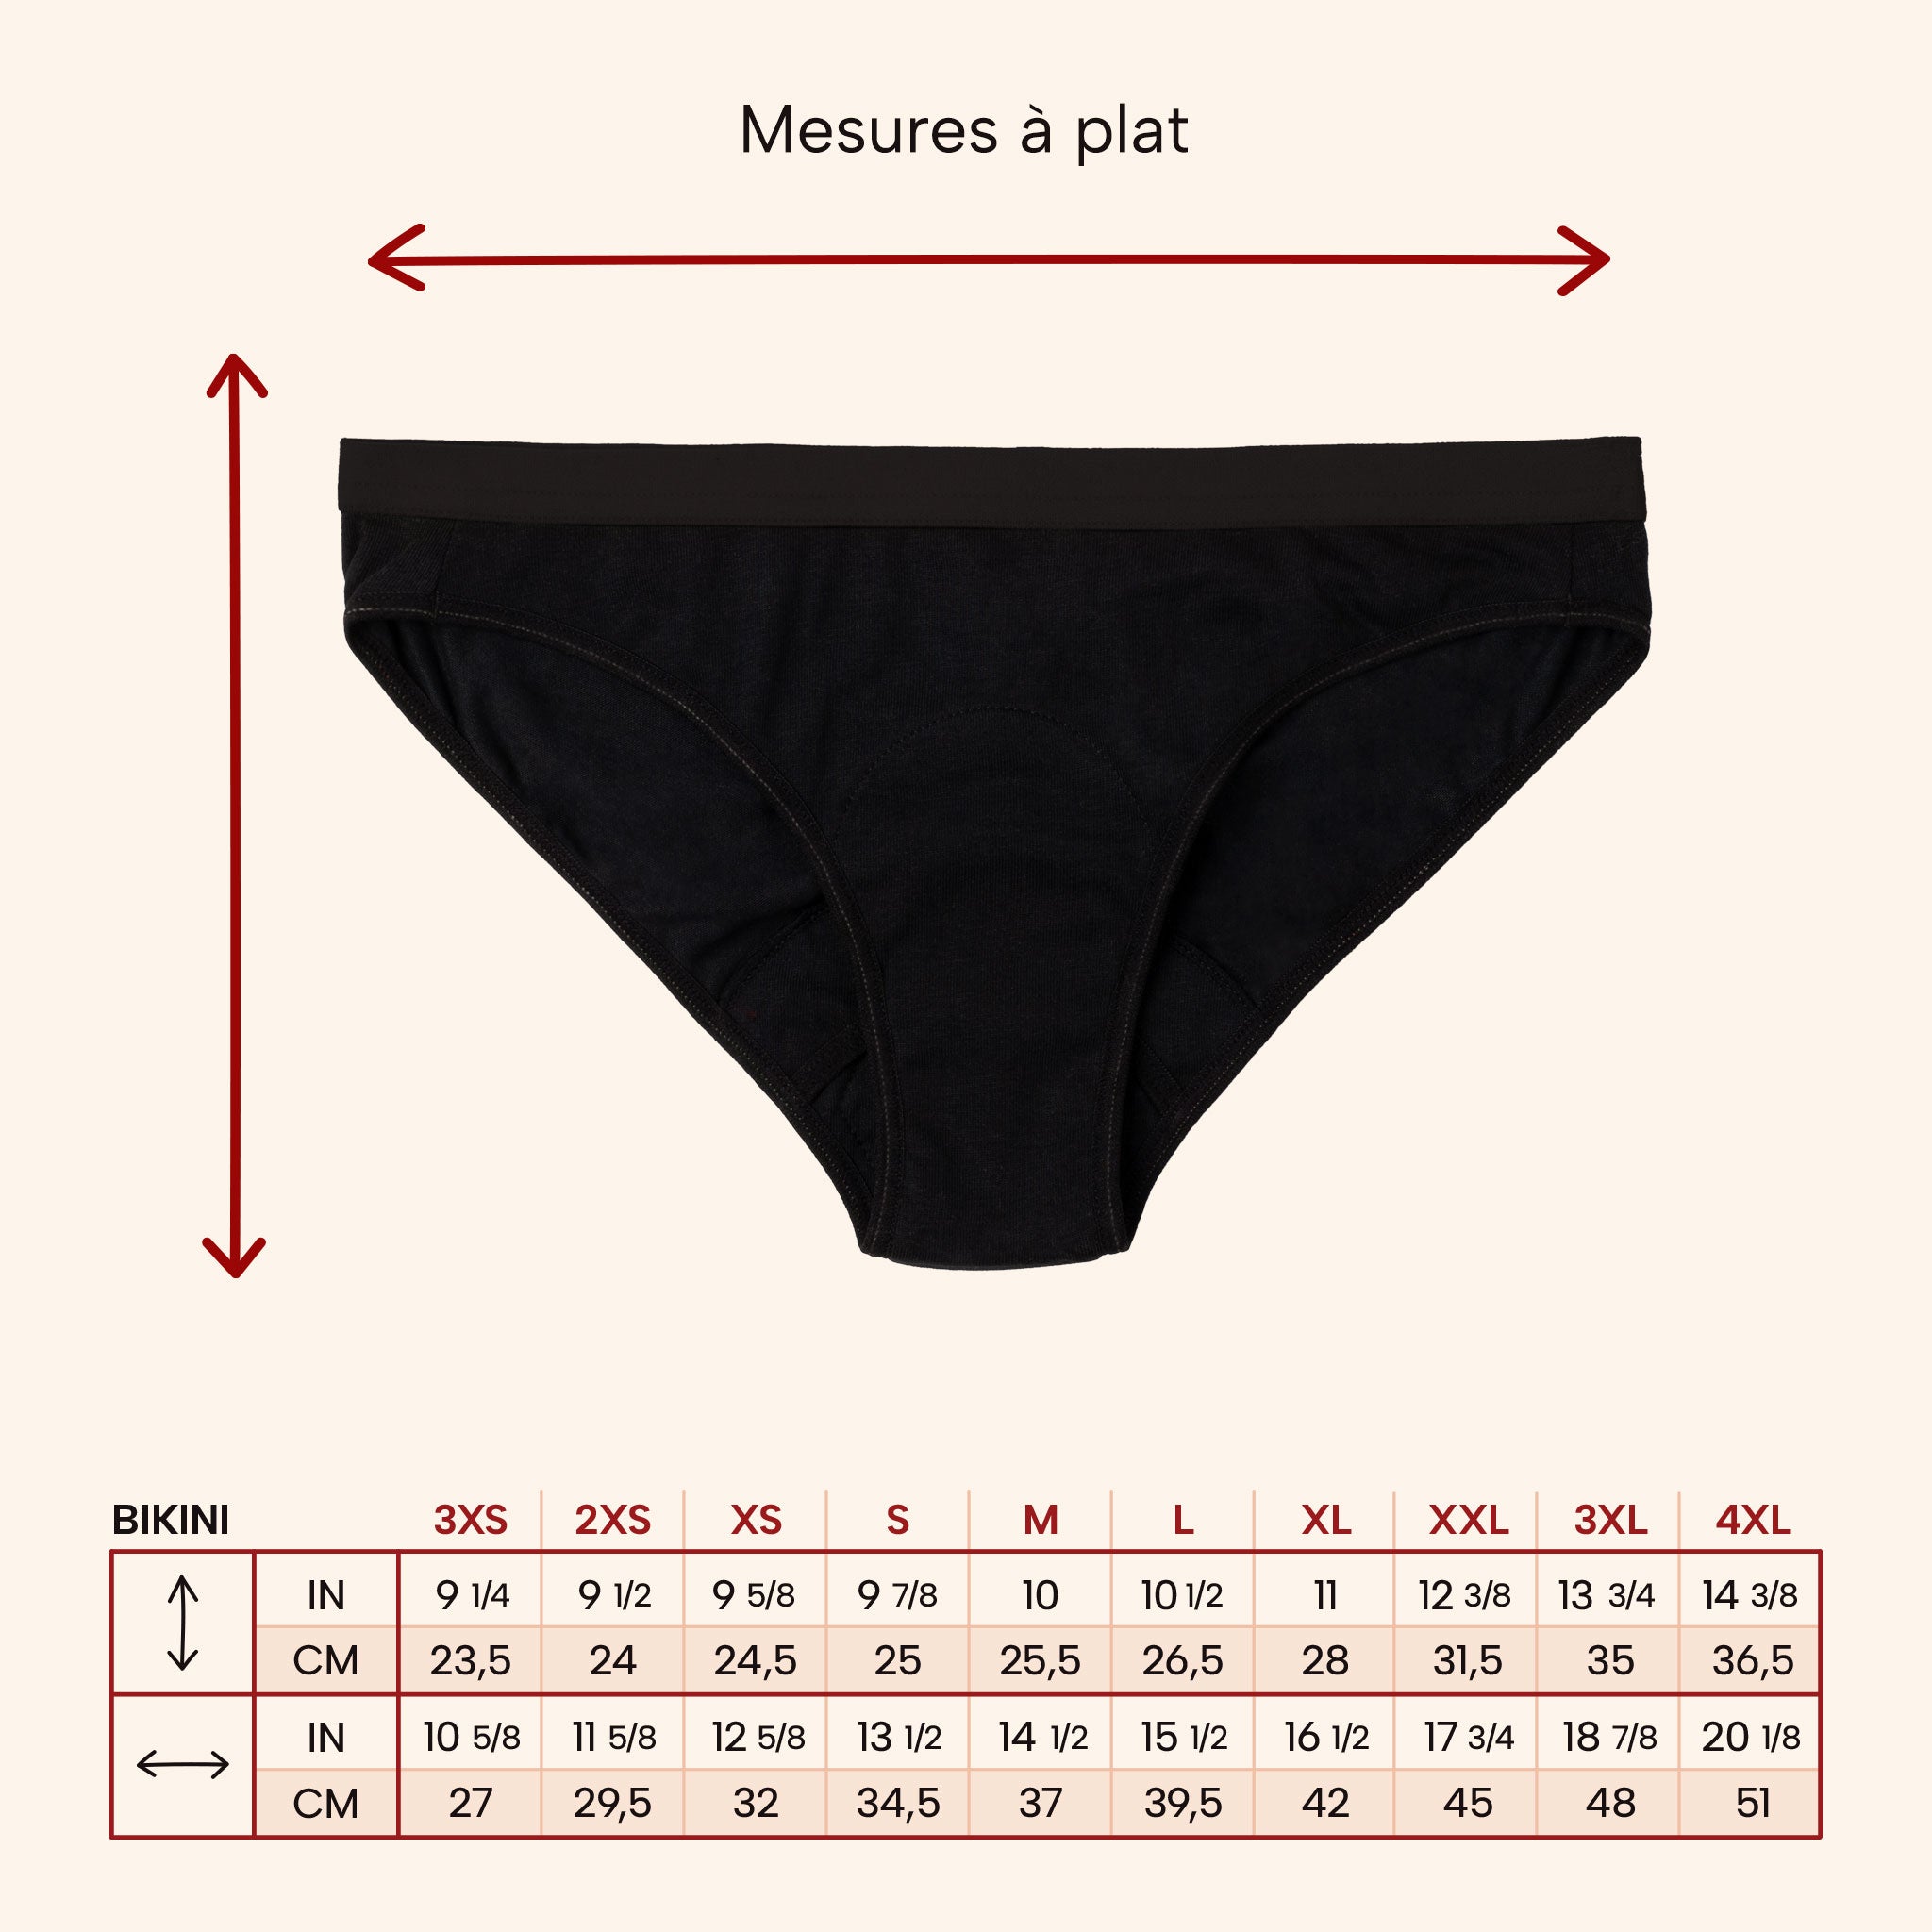 The Black Bikini: Period underwear